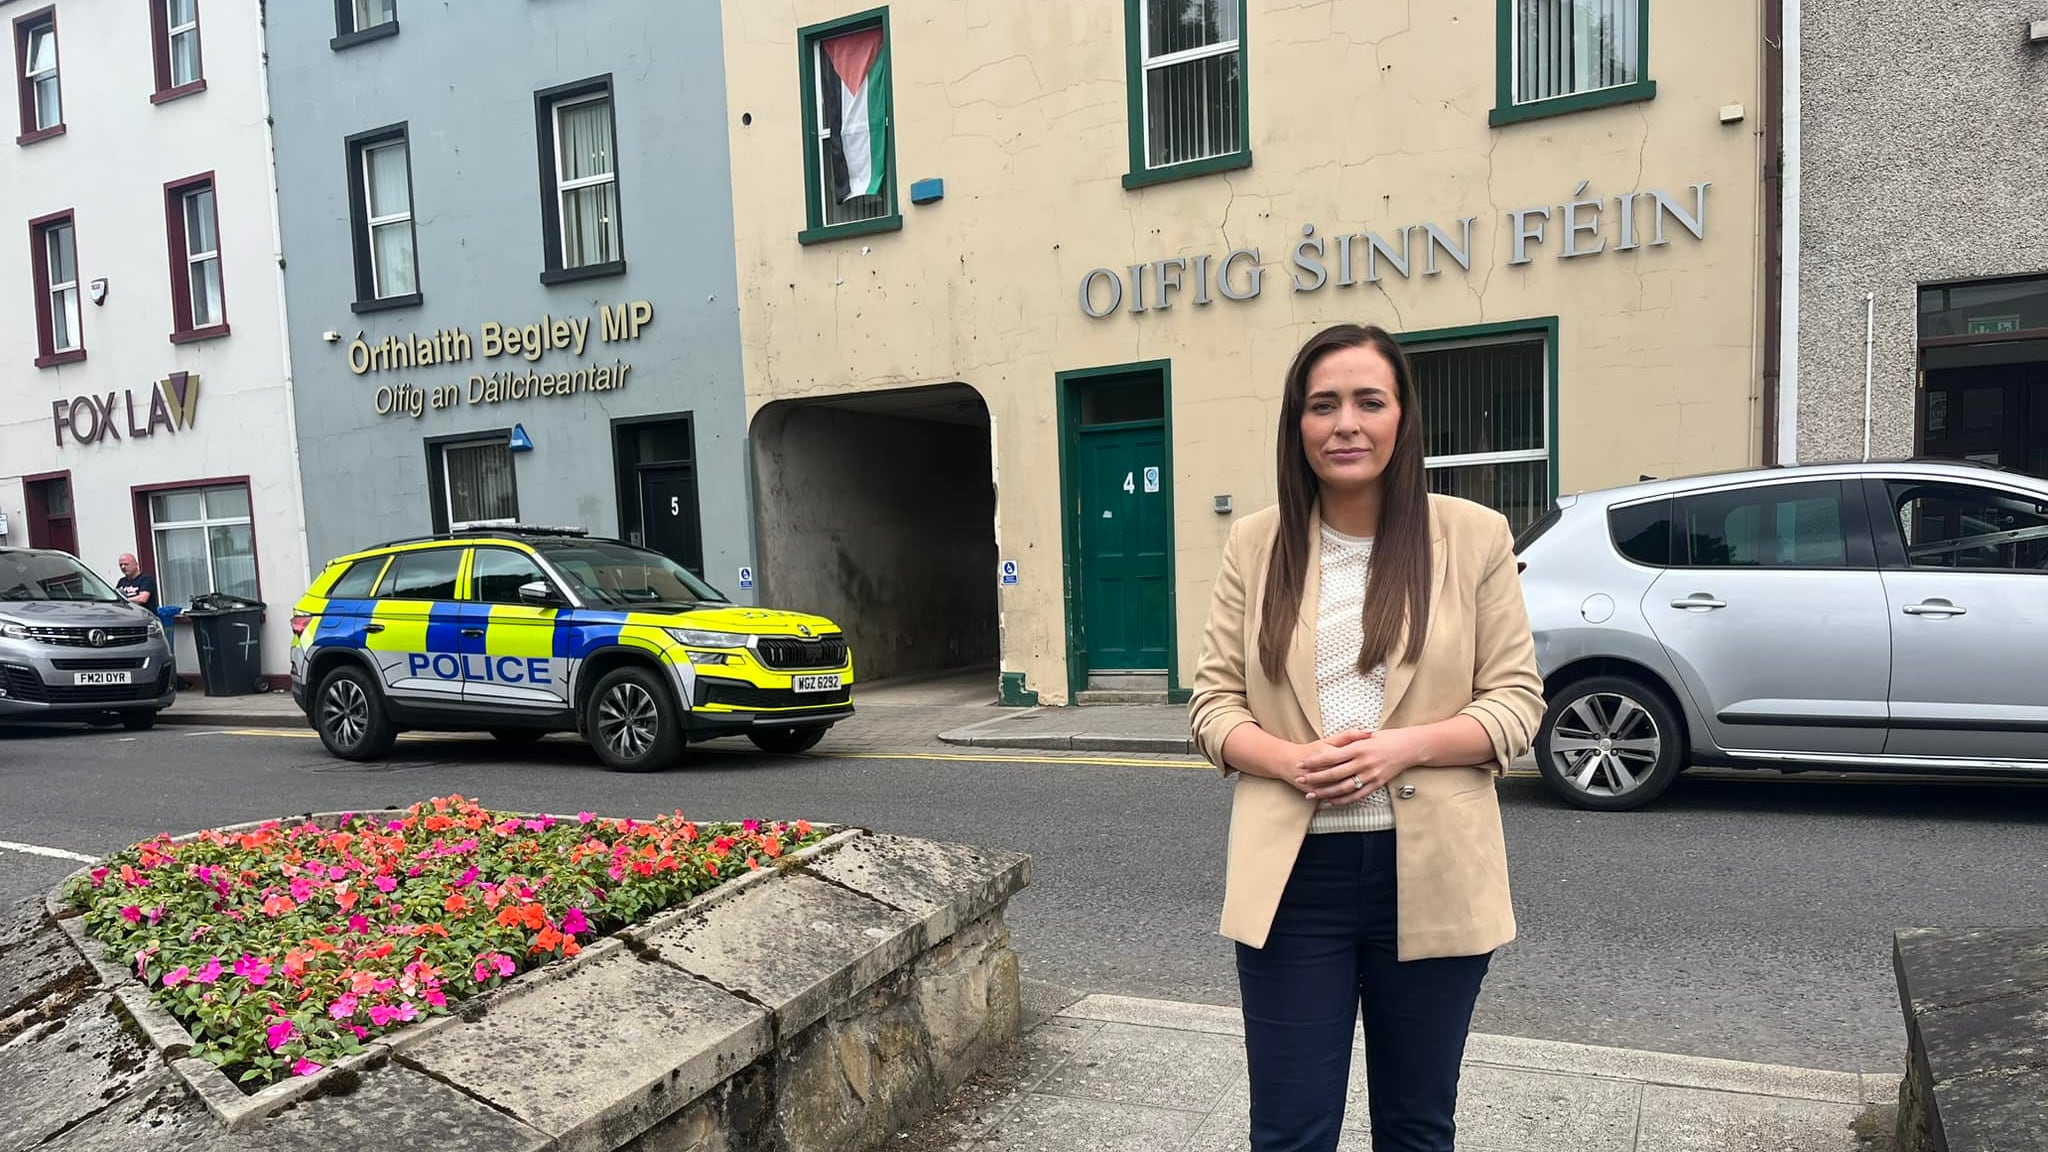 Sinn Fein's Omagh office has closed due to a security alert